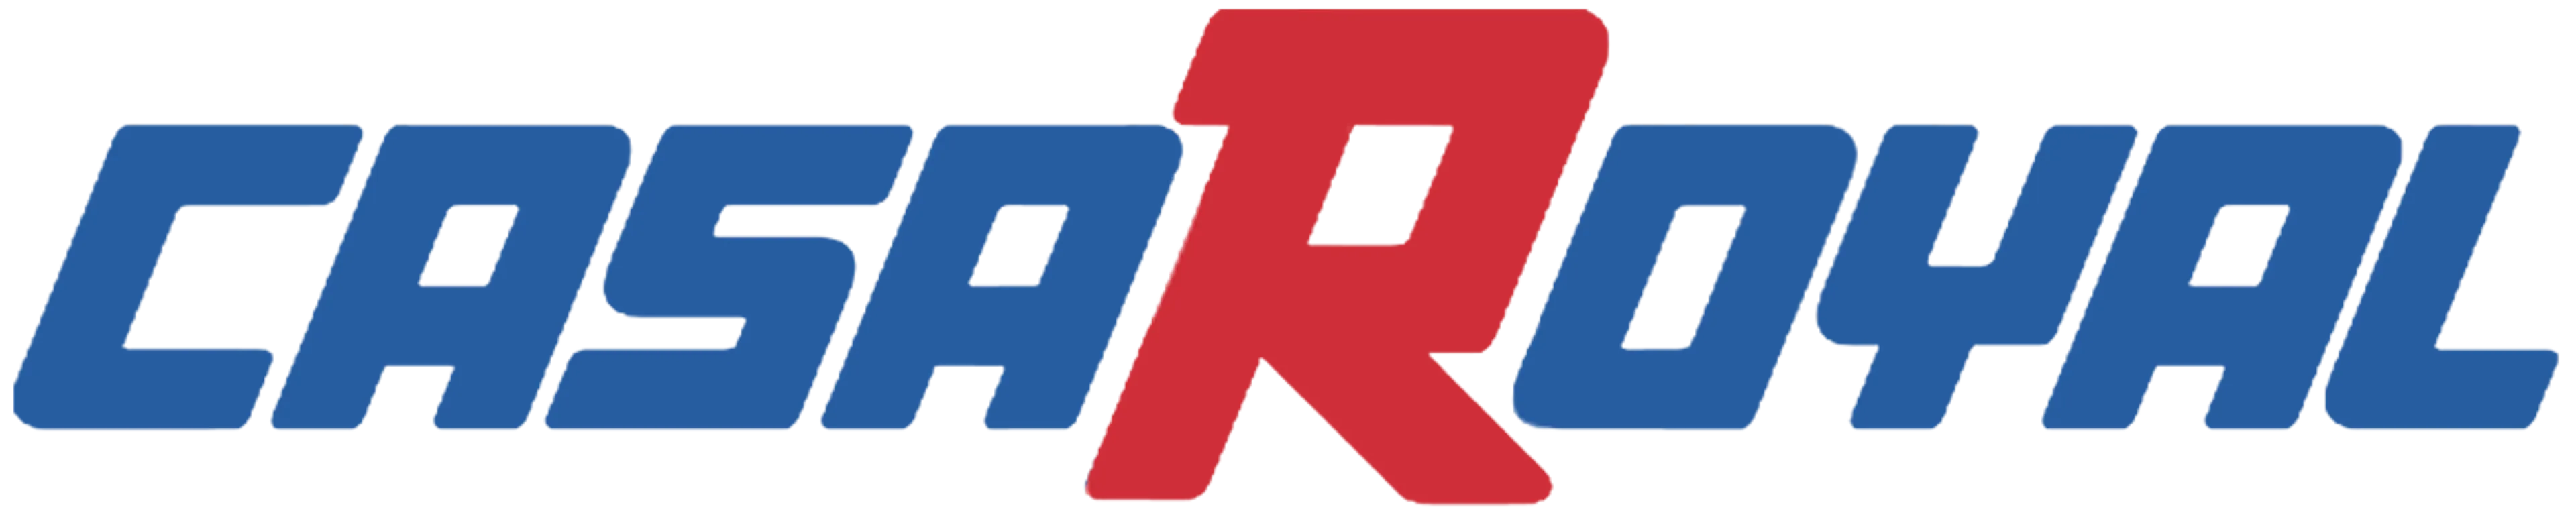 CASA ROYAL logo